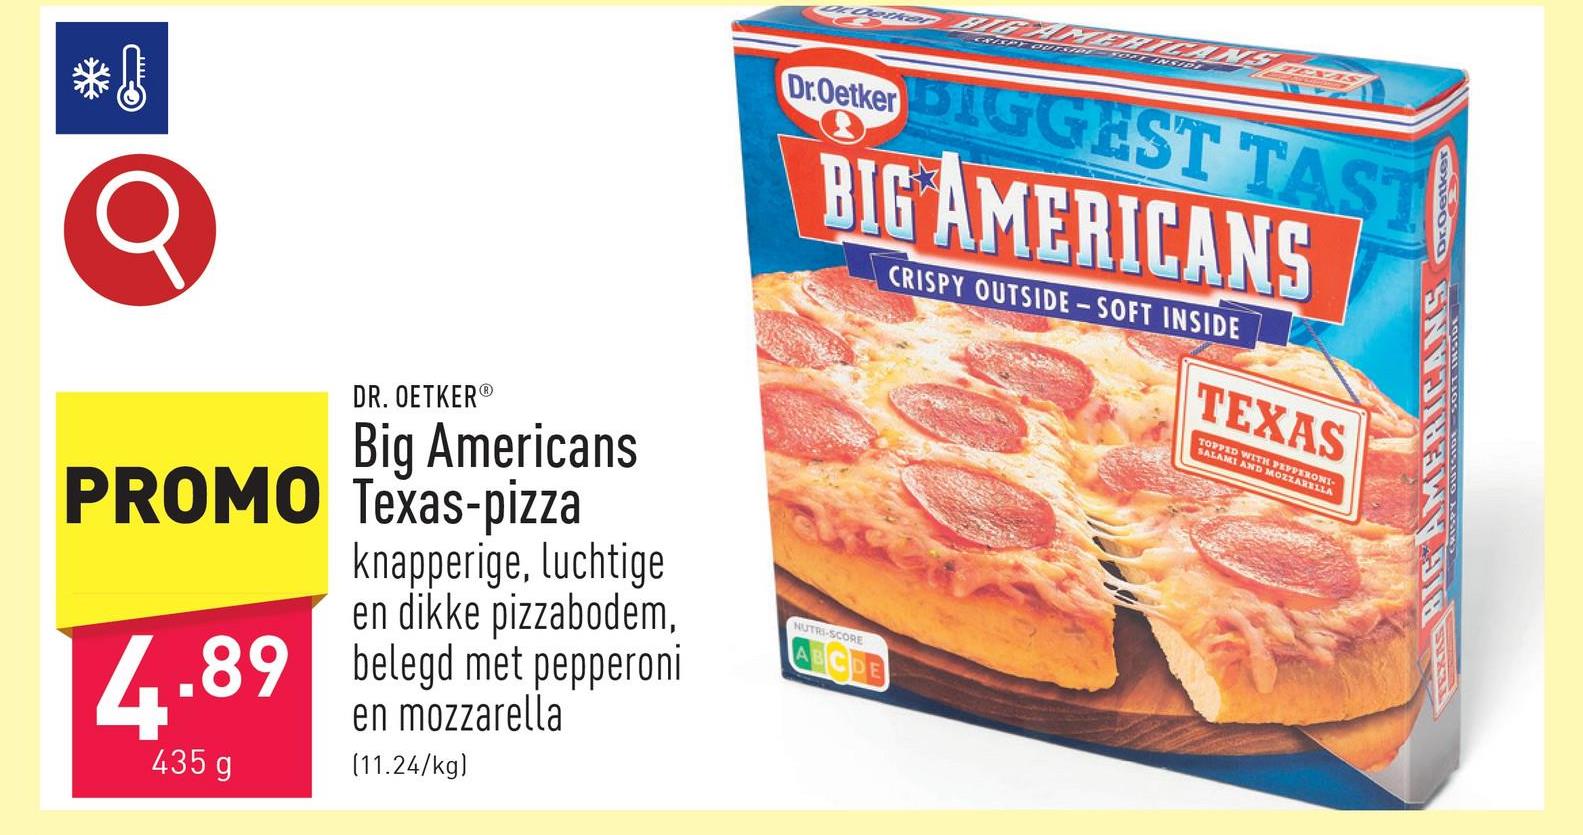 Big Americans Texas-pizza knapperige, luchtige en dikke pizzabodem, belegd met pepperoni en mozzarella